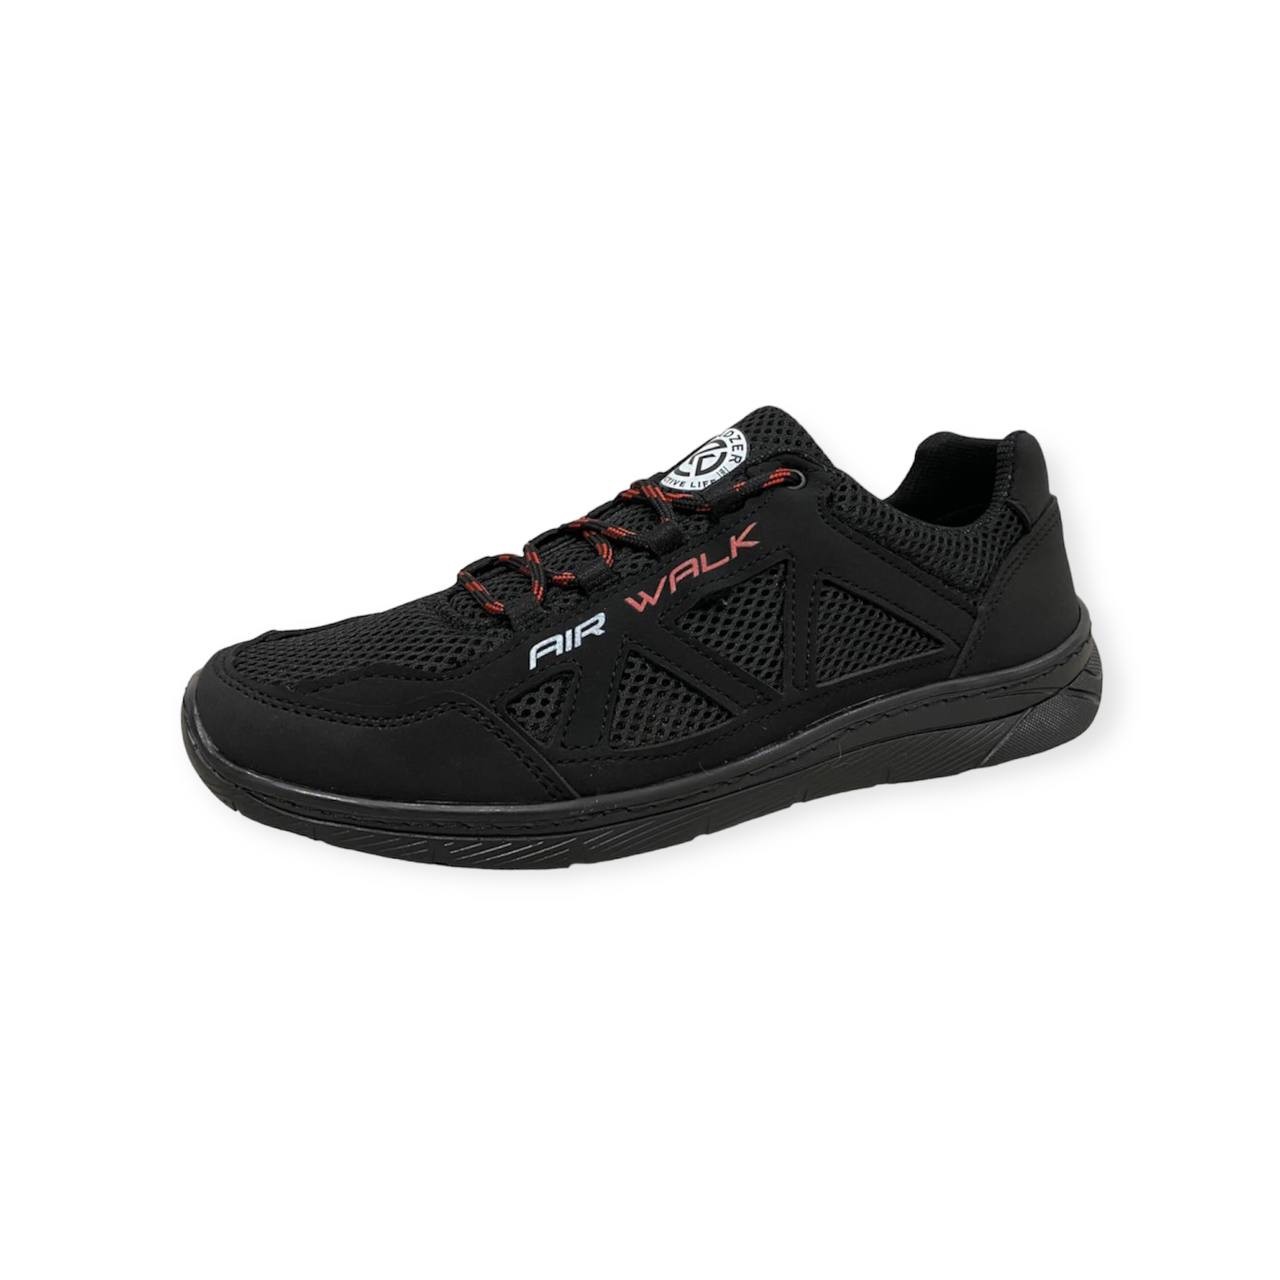 Men's summer textile black sneakers (KLS-710)